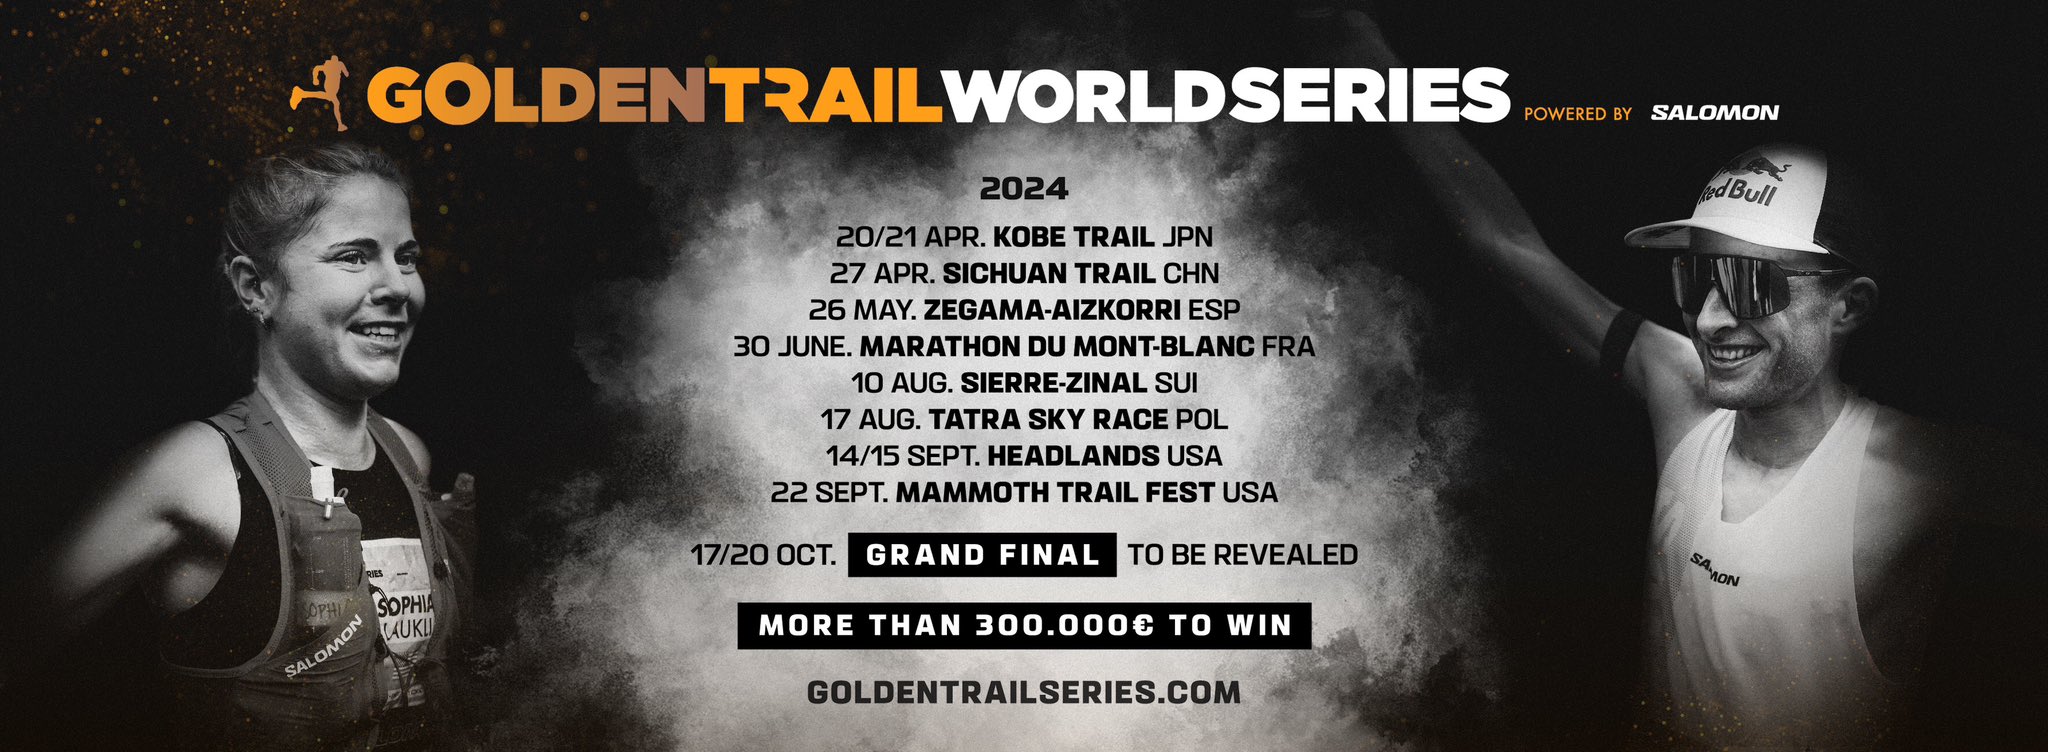 Las Golden Trail World Series revela su calendario 2024 post thumbnail image